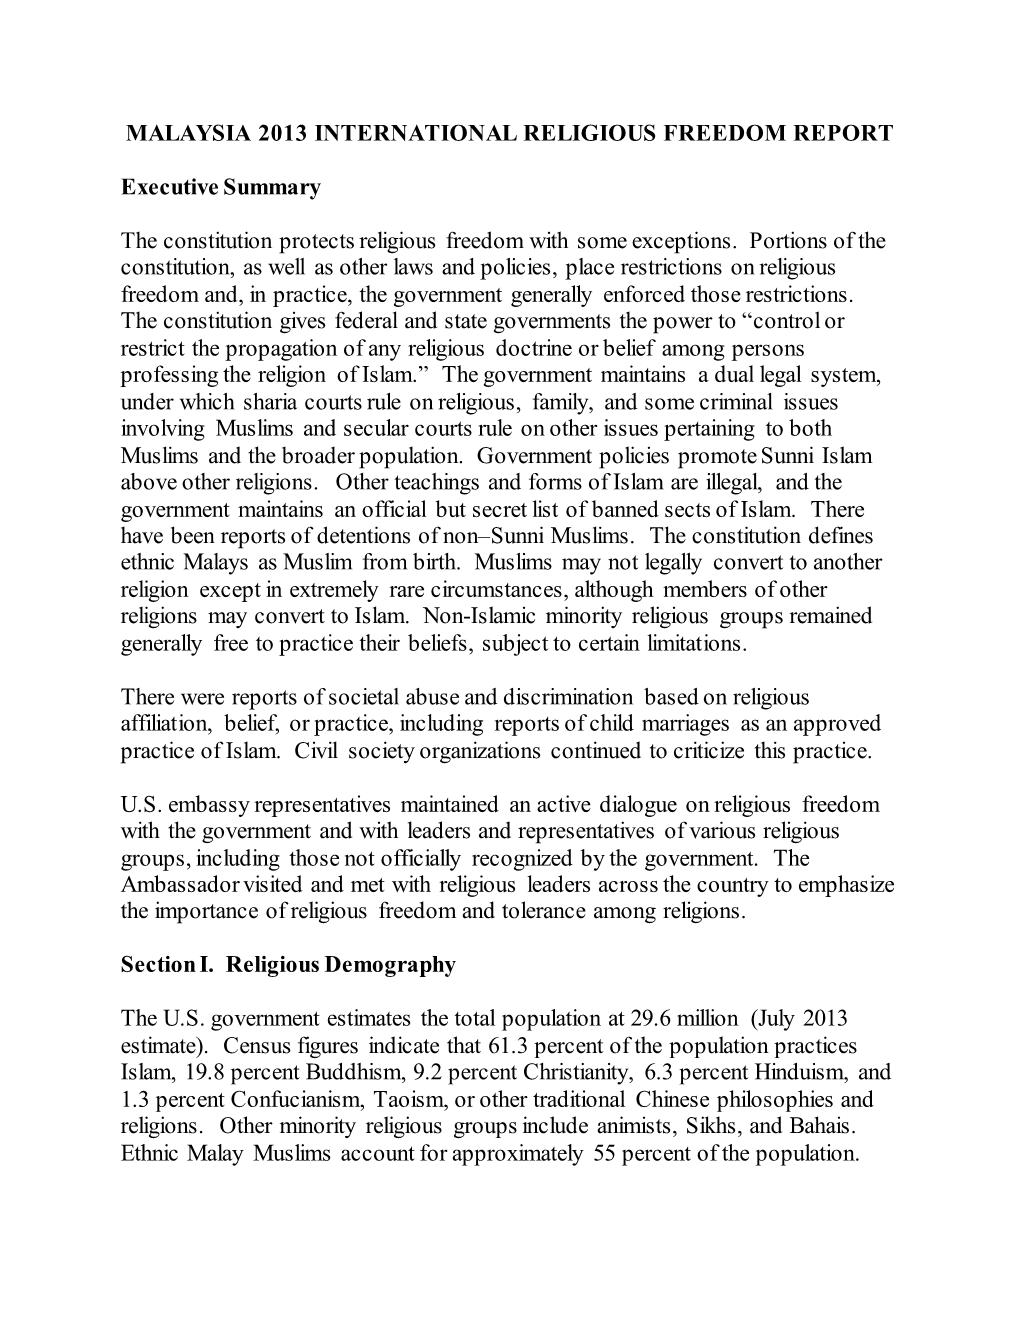 Malaysia 2013 International Religious Freedom Report